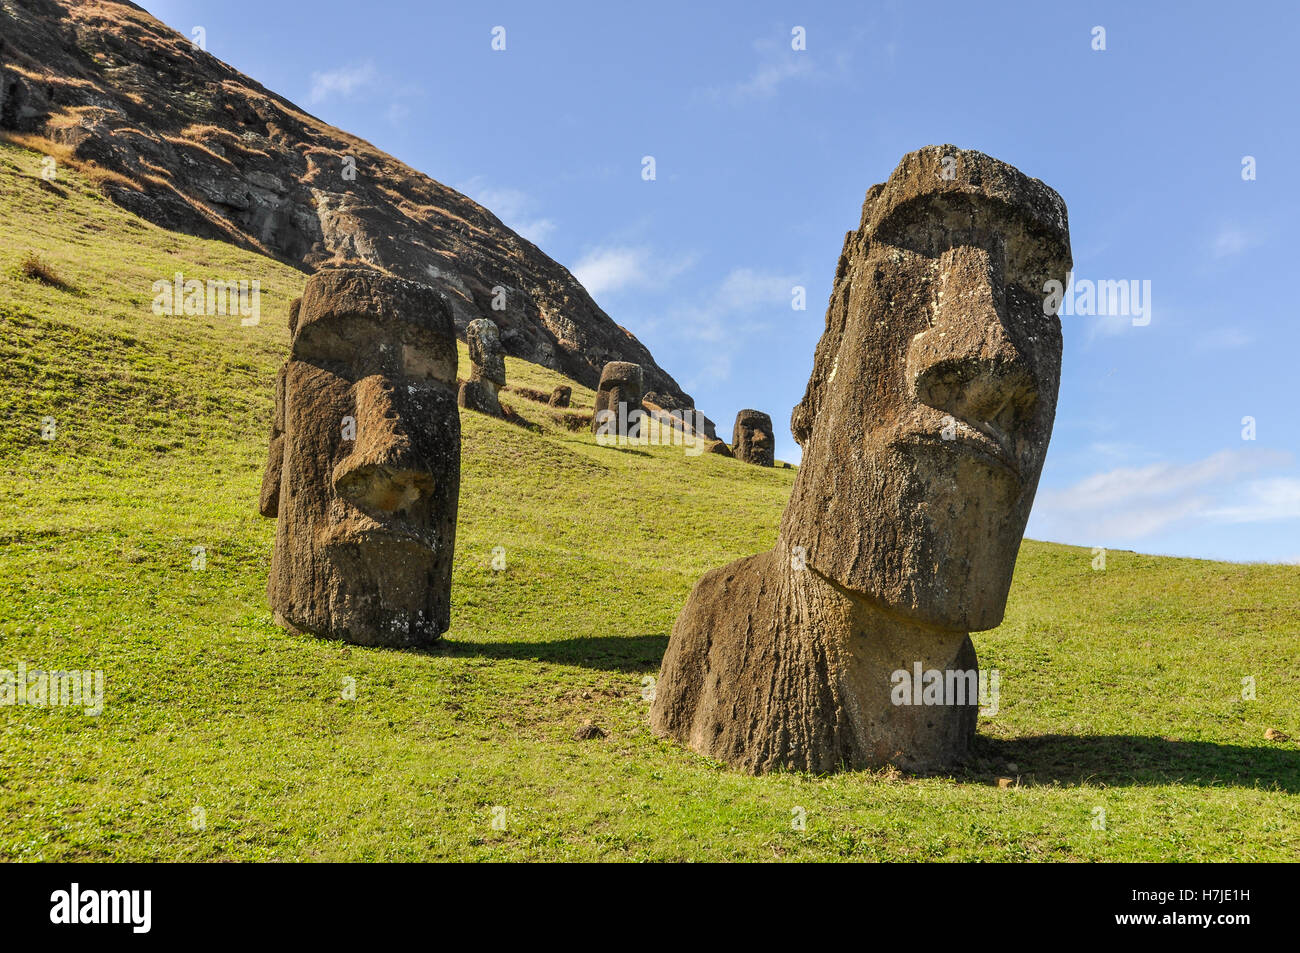 Moai statues in the Rano Raraku Volcano in Easter Island, Chile Stock Photo